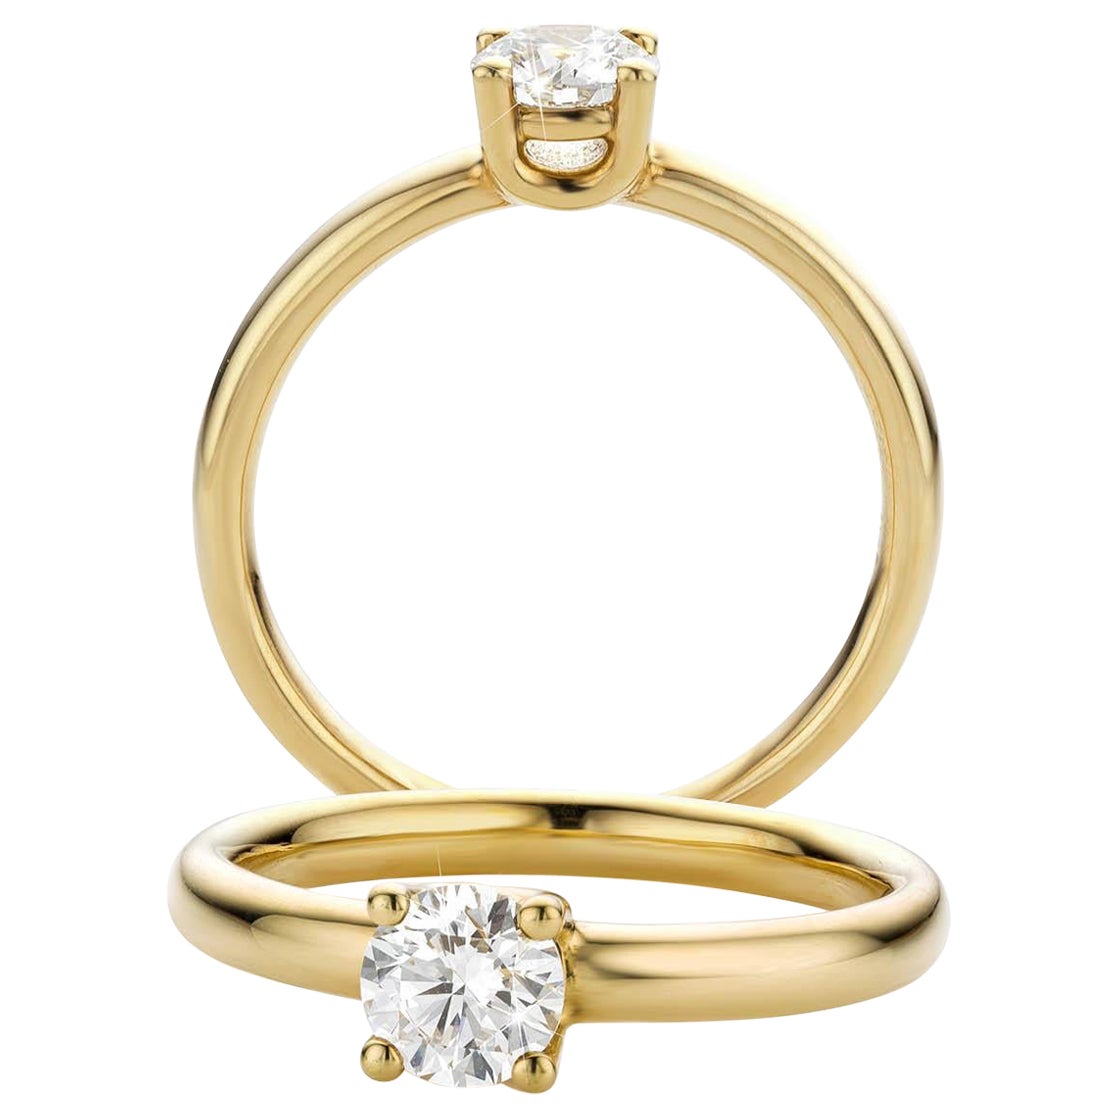 Cober “Classic Brilliant” Yellow Gold ring with a 0.50 ct. Brilliant-cut Diamond